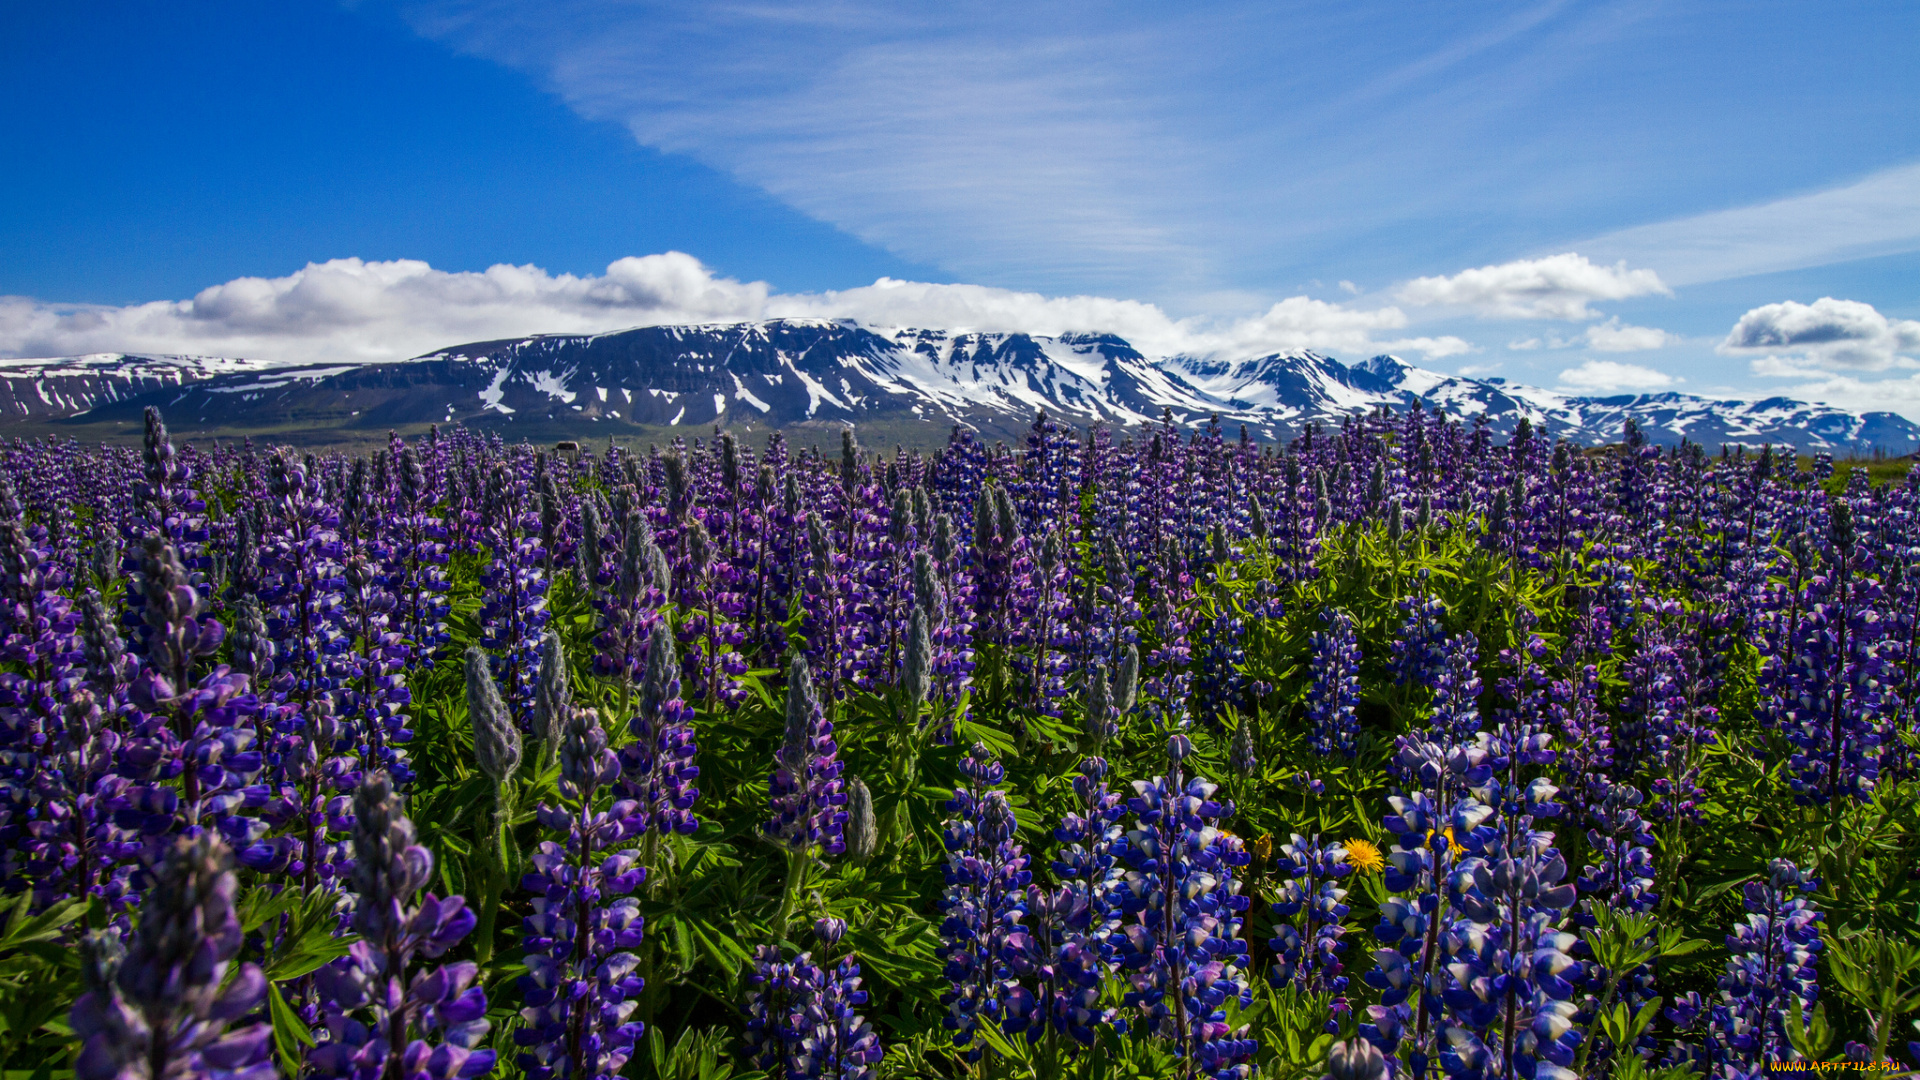 thorshofn, nordur, tingeyjarsysla, iceland, цветы, люпин, тоурсхёбн, nordur-tingeyjarsysla, исландия, луг, горы